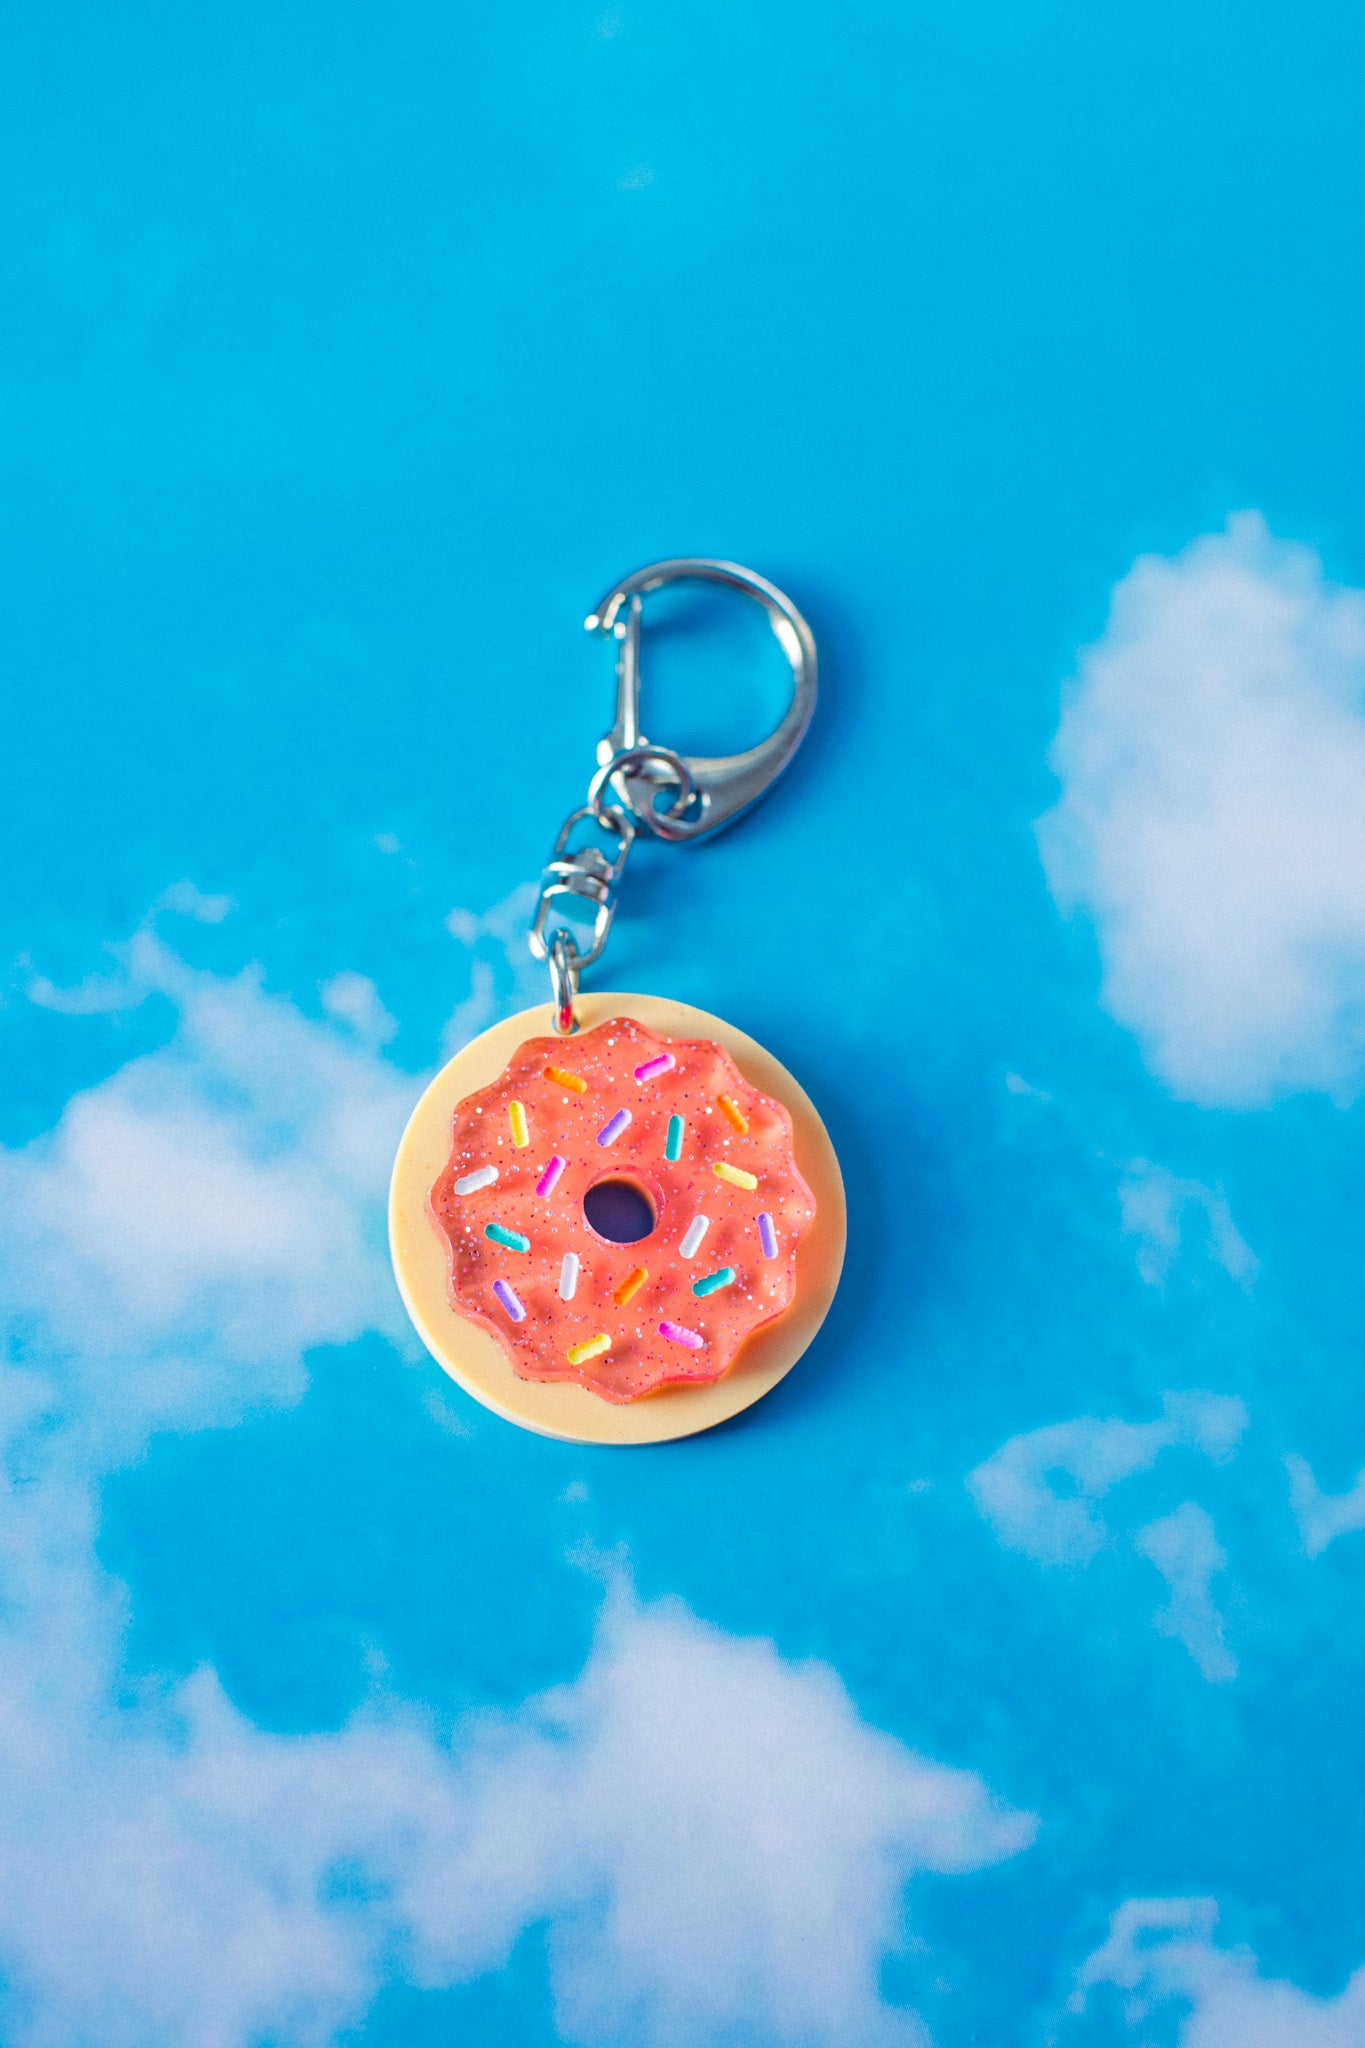 Delicious donut keychain